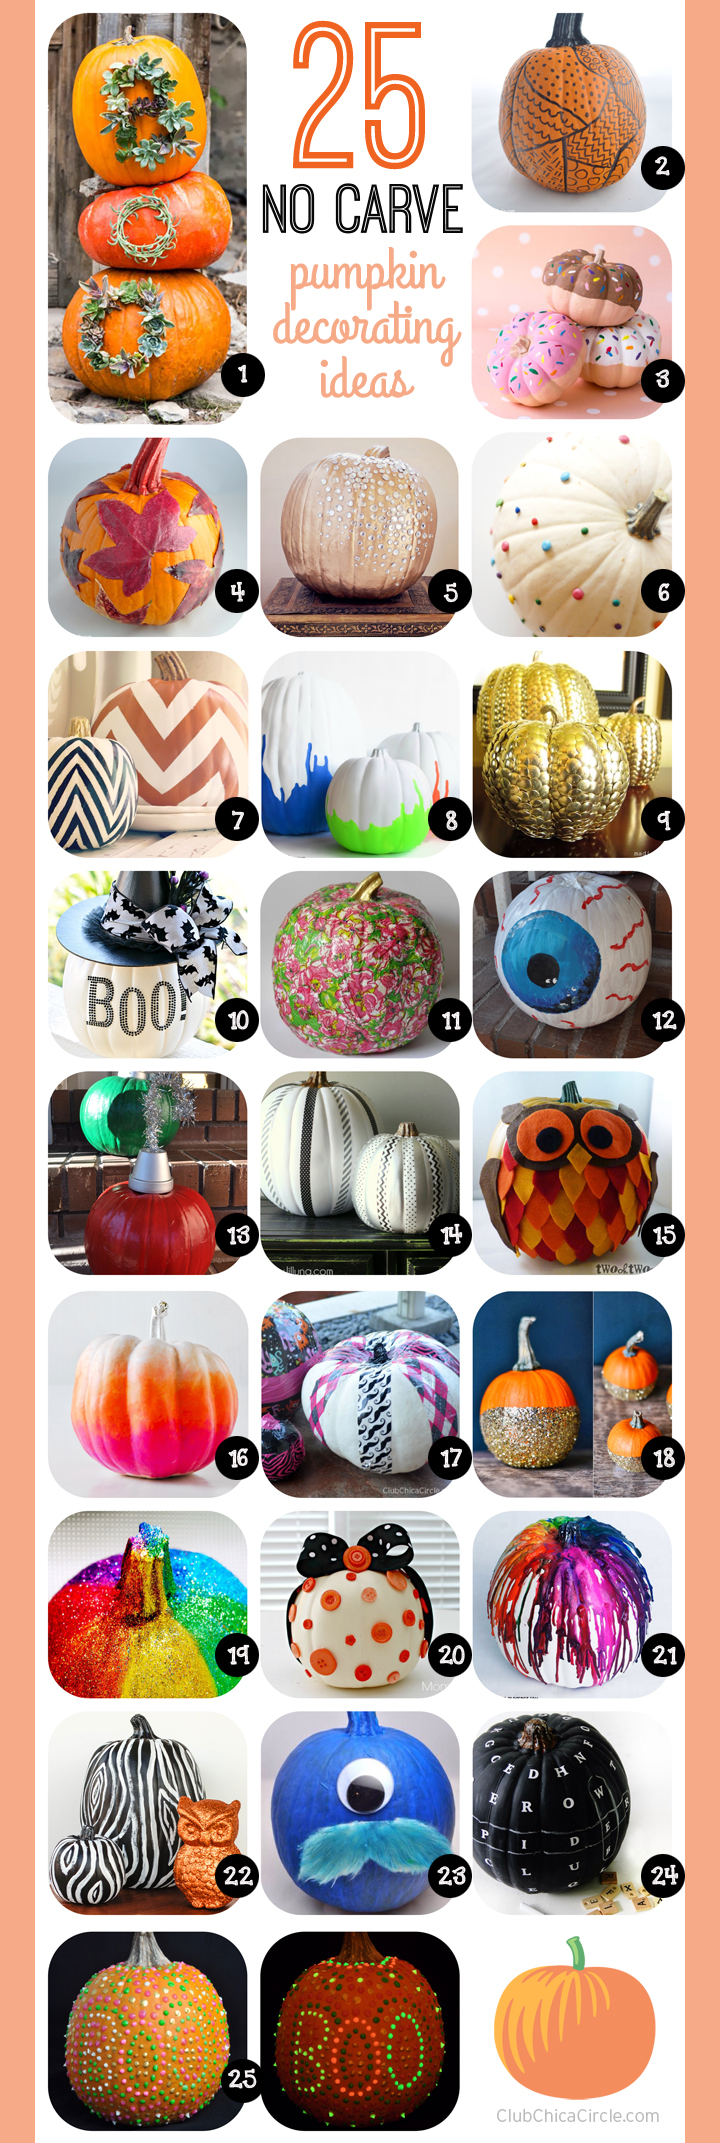 25 No Carve Pumpkin Decorating Ideas